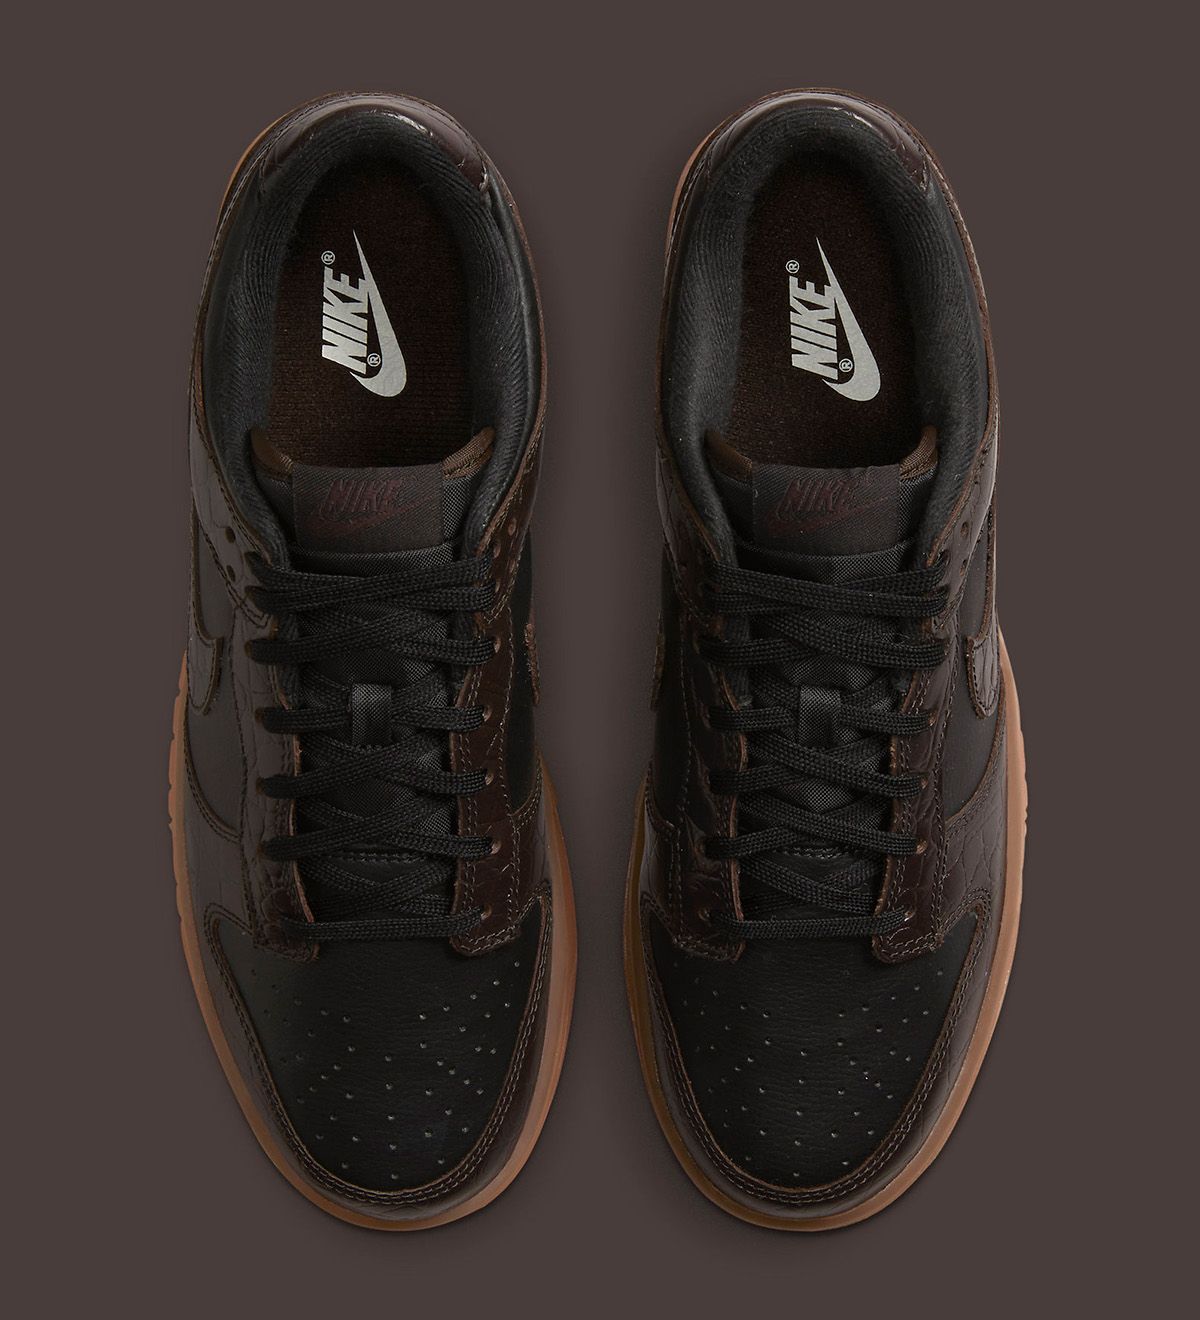 Nike Dunk Low “Chocolate Croc” is Coming Soon | LaptrinhX / News